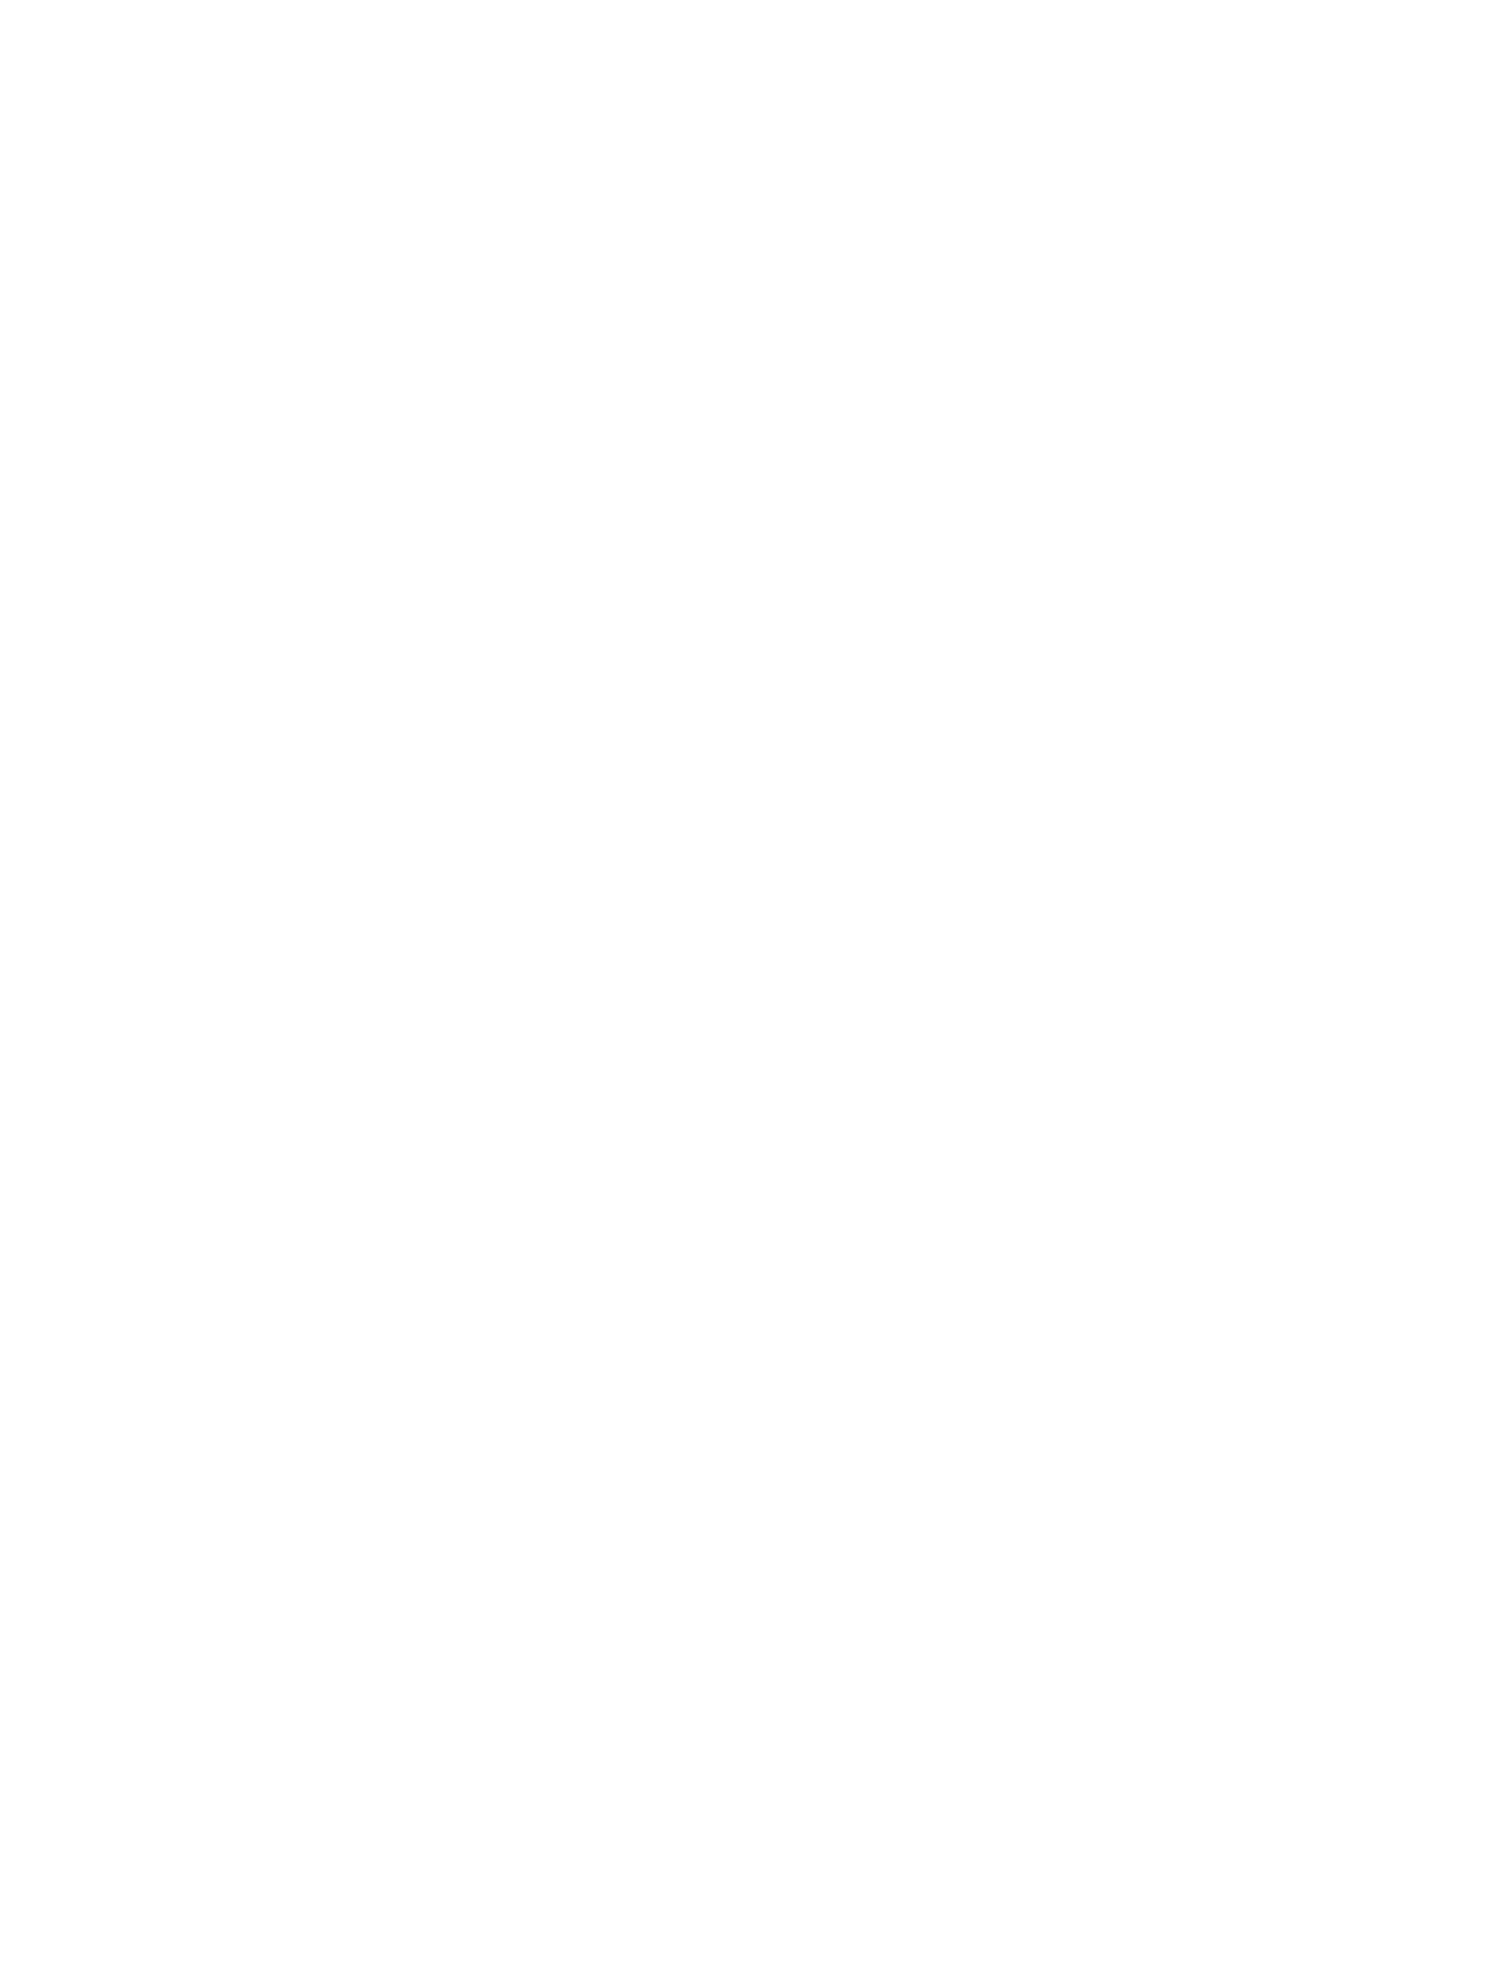 Cargo House Coffee